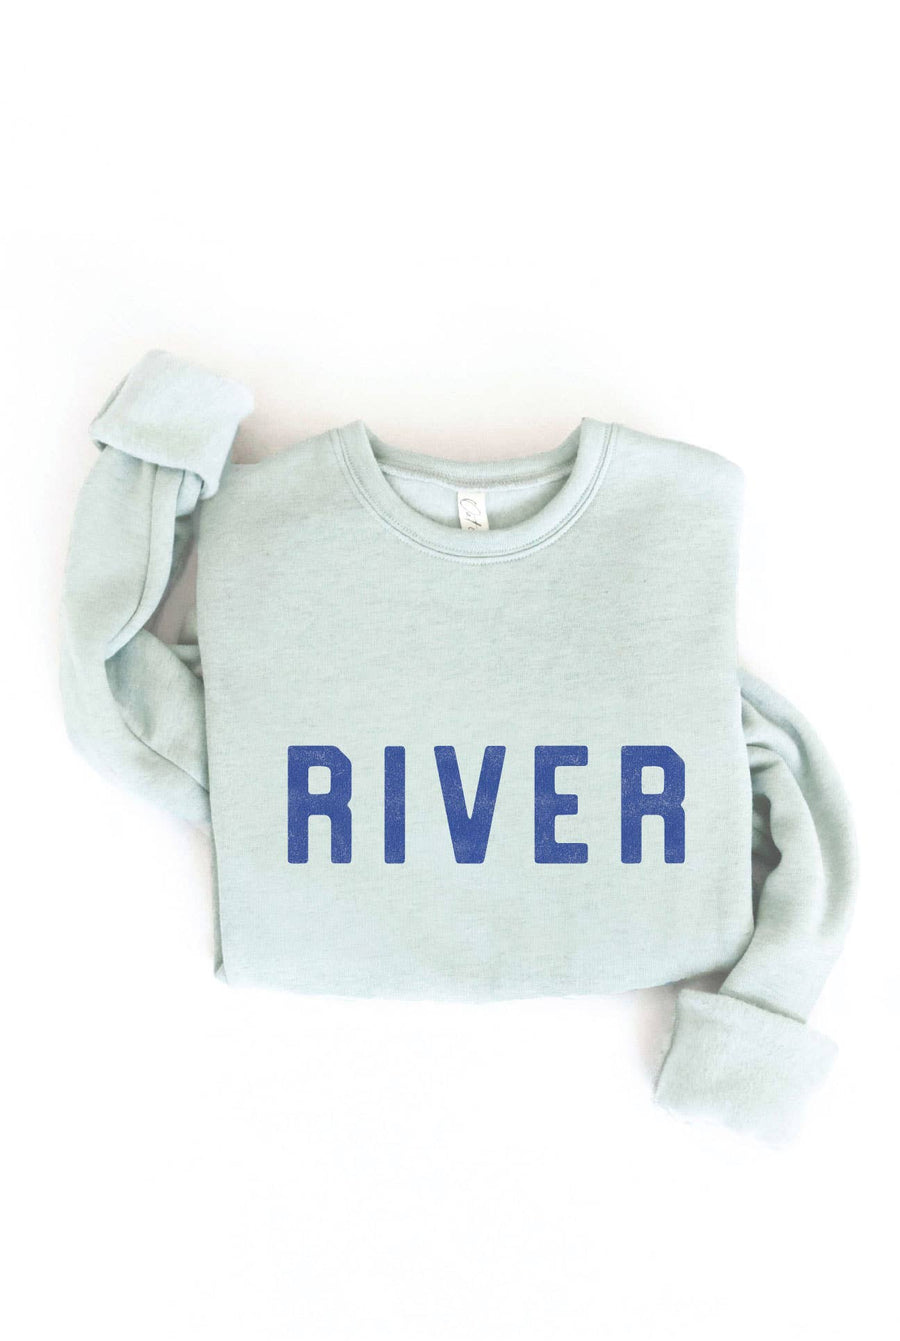 RIVER Graphic Sweatshirt: M